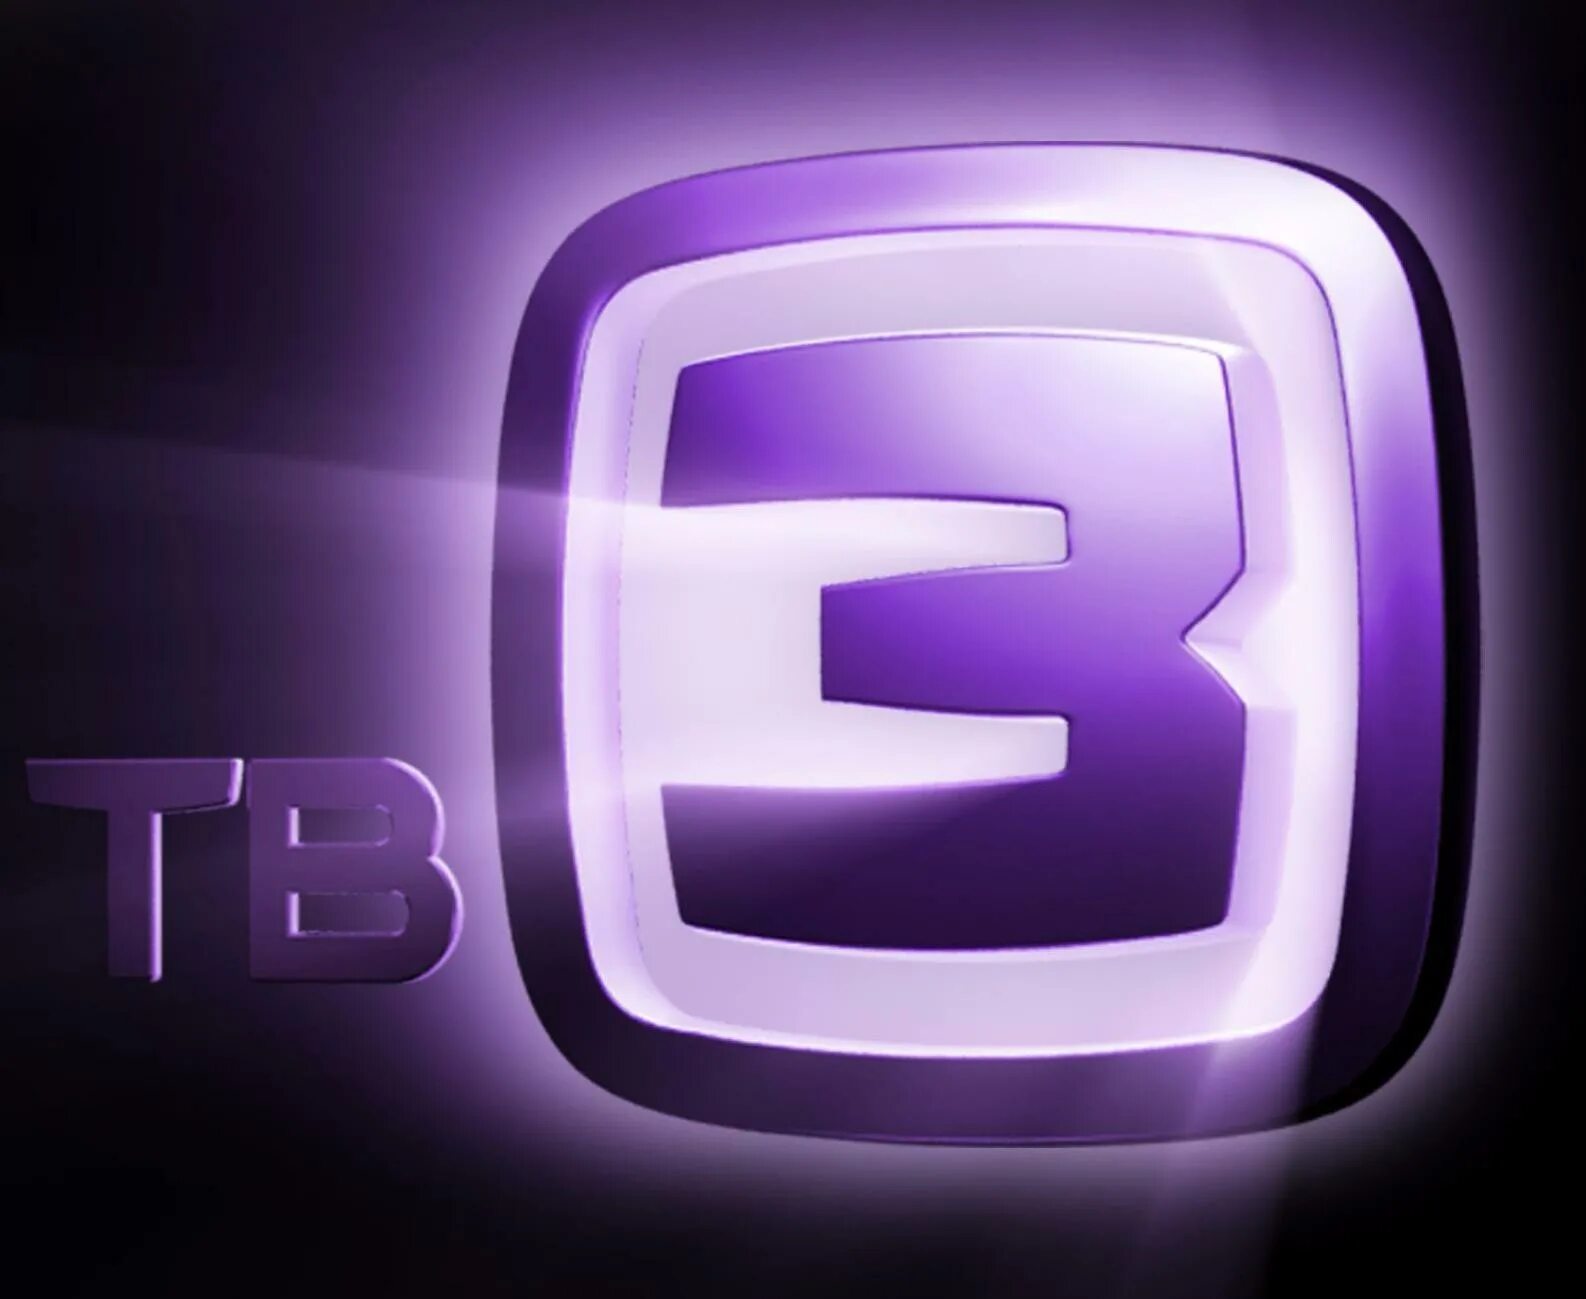 Тв3 логотип 2012. Тв3 Телеканал логотип. Канал тв3. ТВ 3 эмблема.